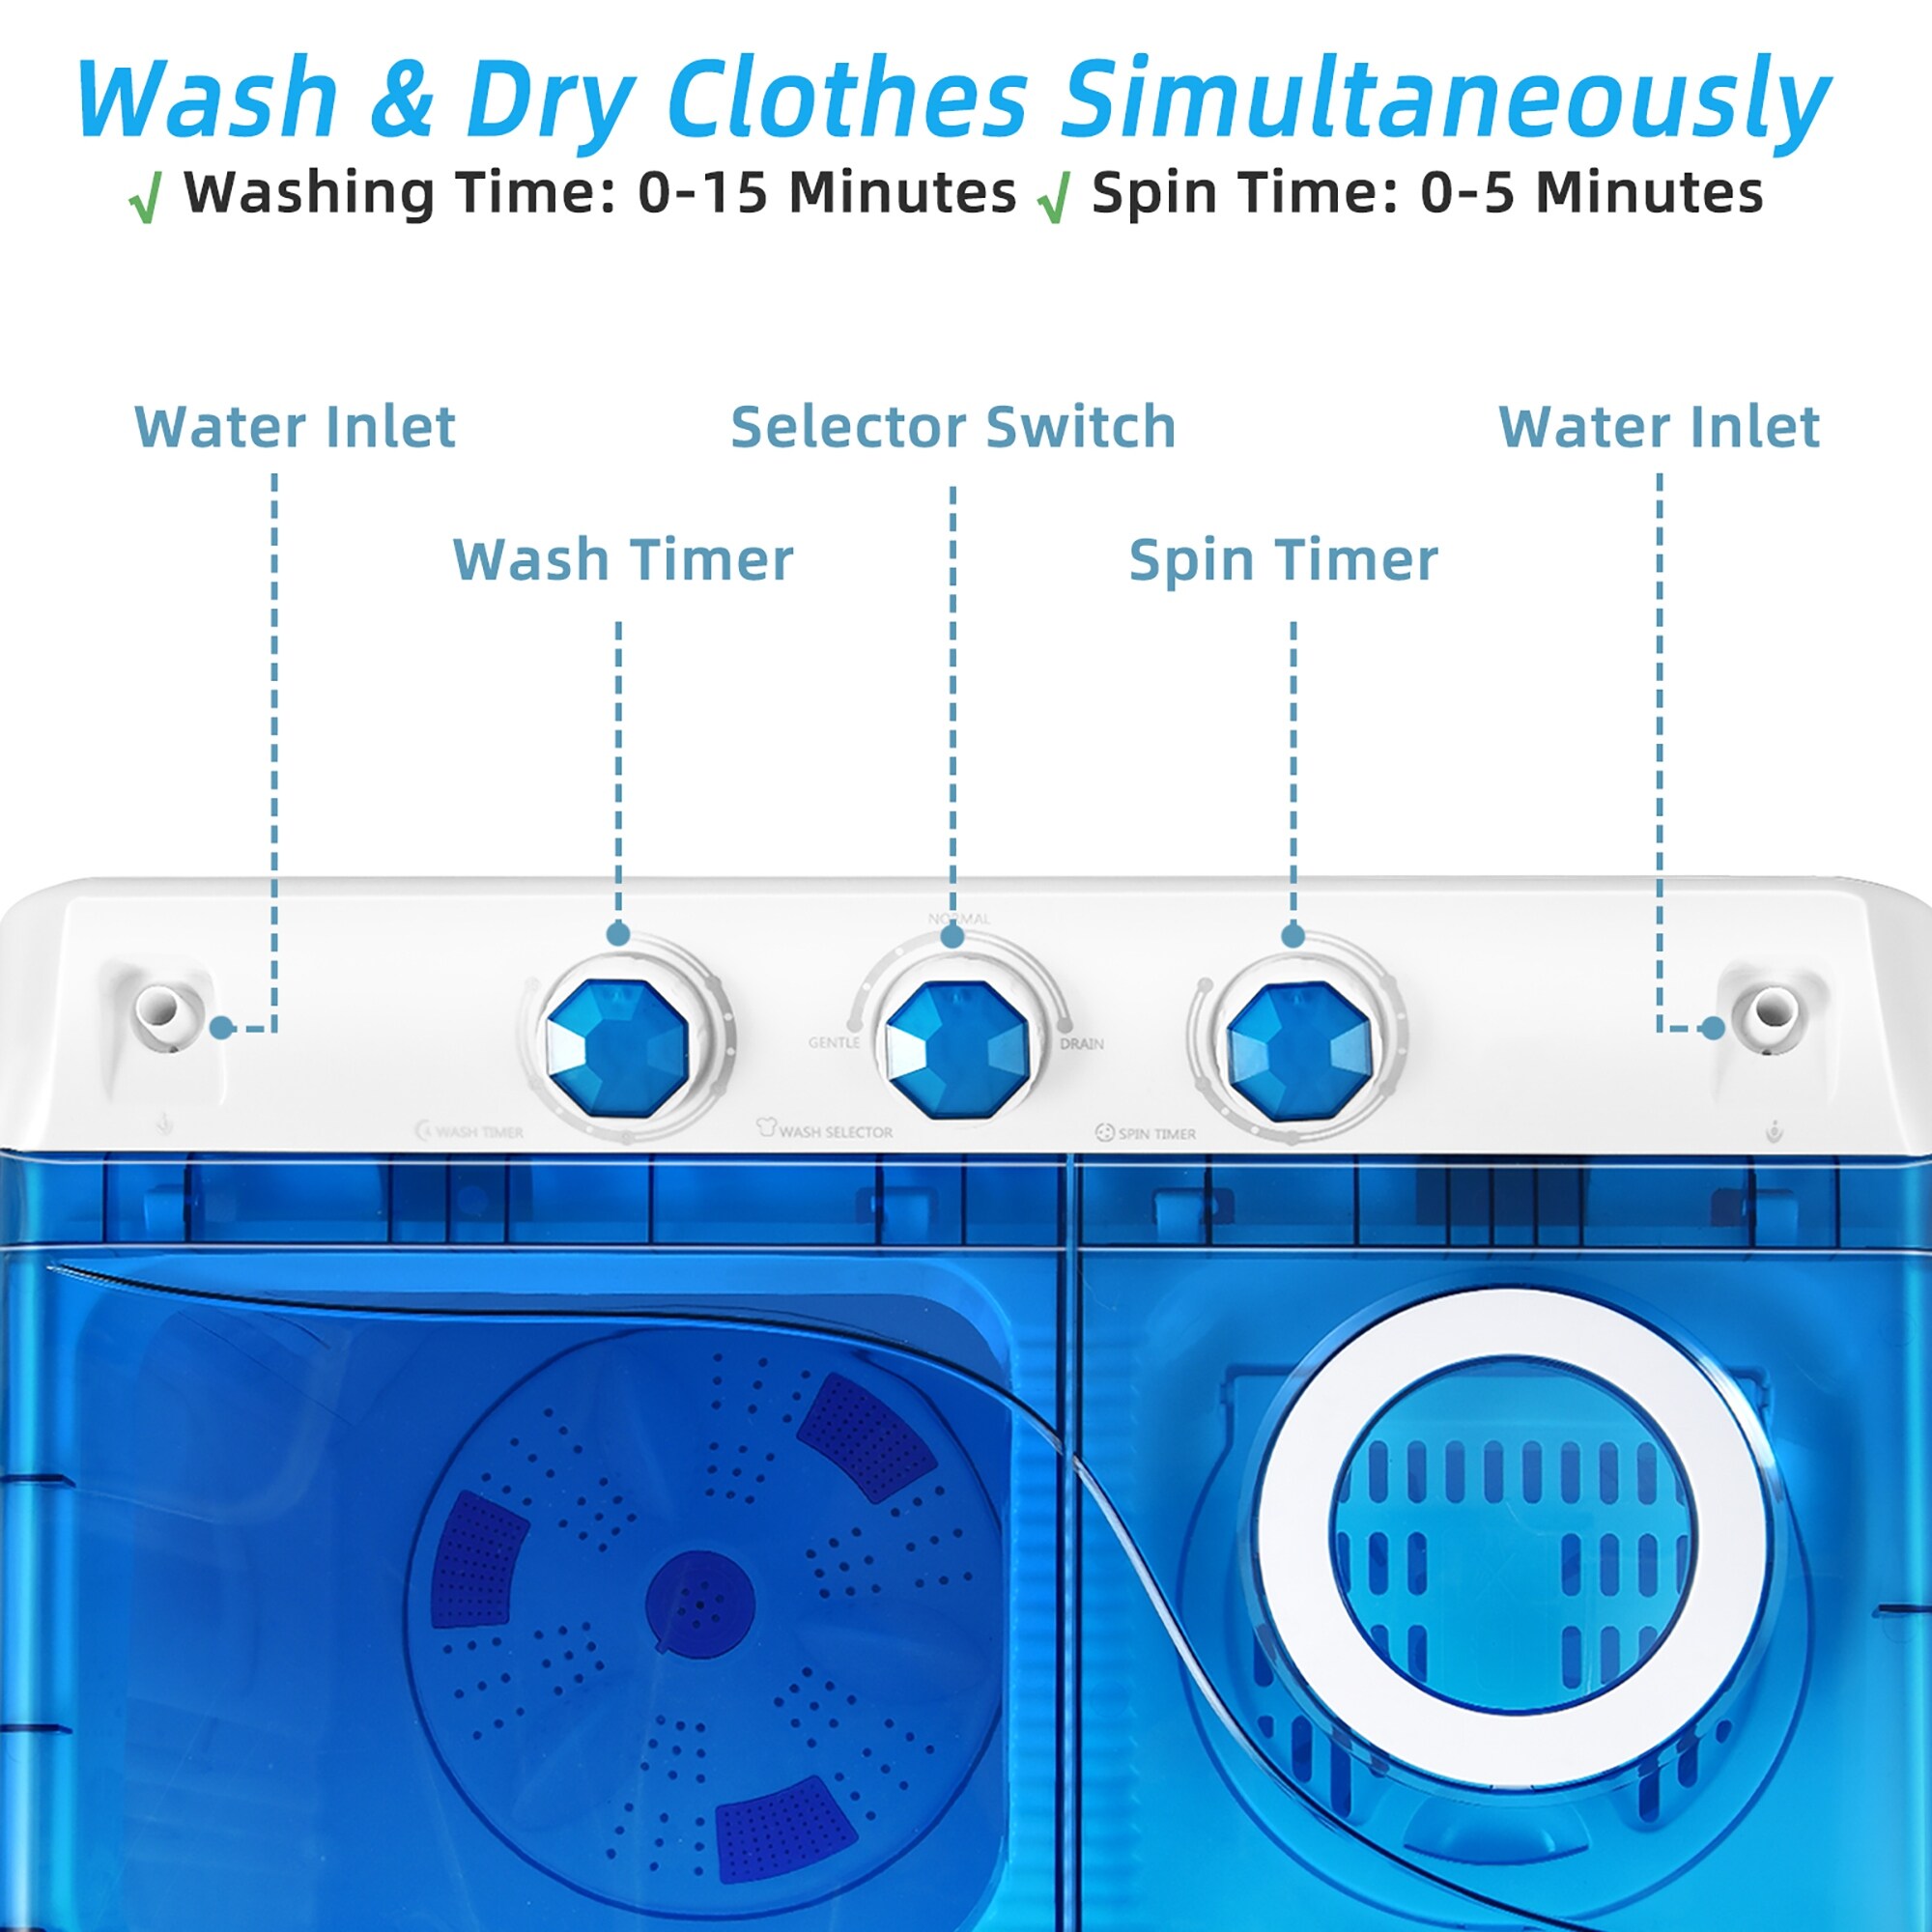 Costway 26lbs Portable Semi-Automatic Washing Machine w/Built-In Drain Pump Grey